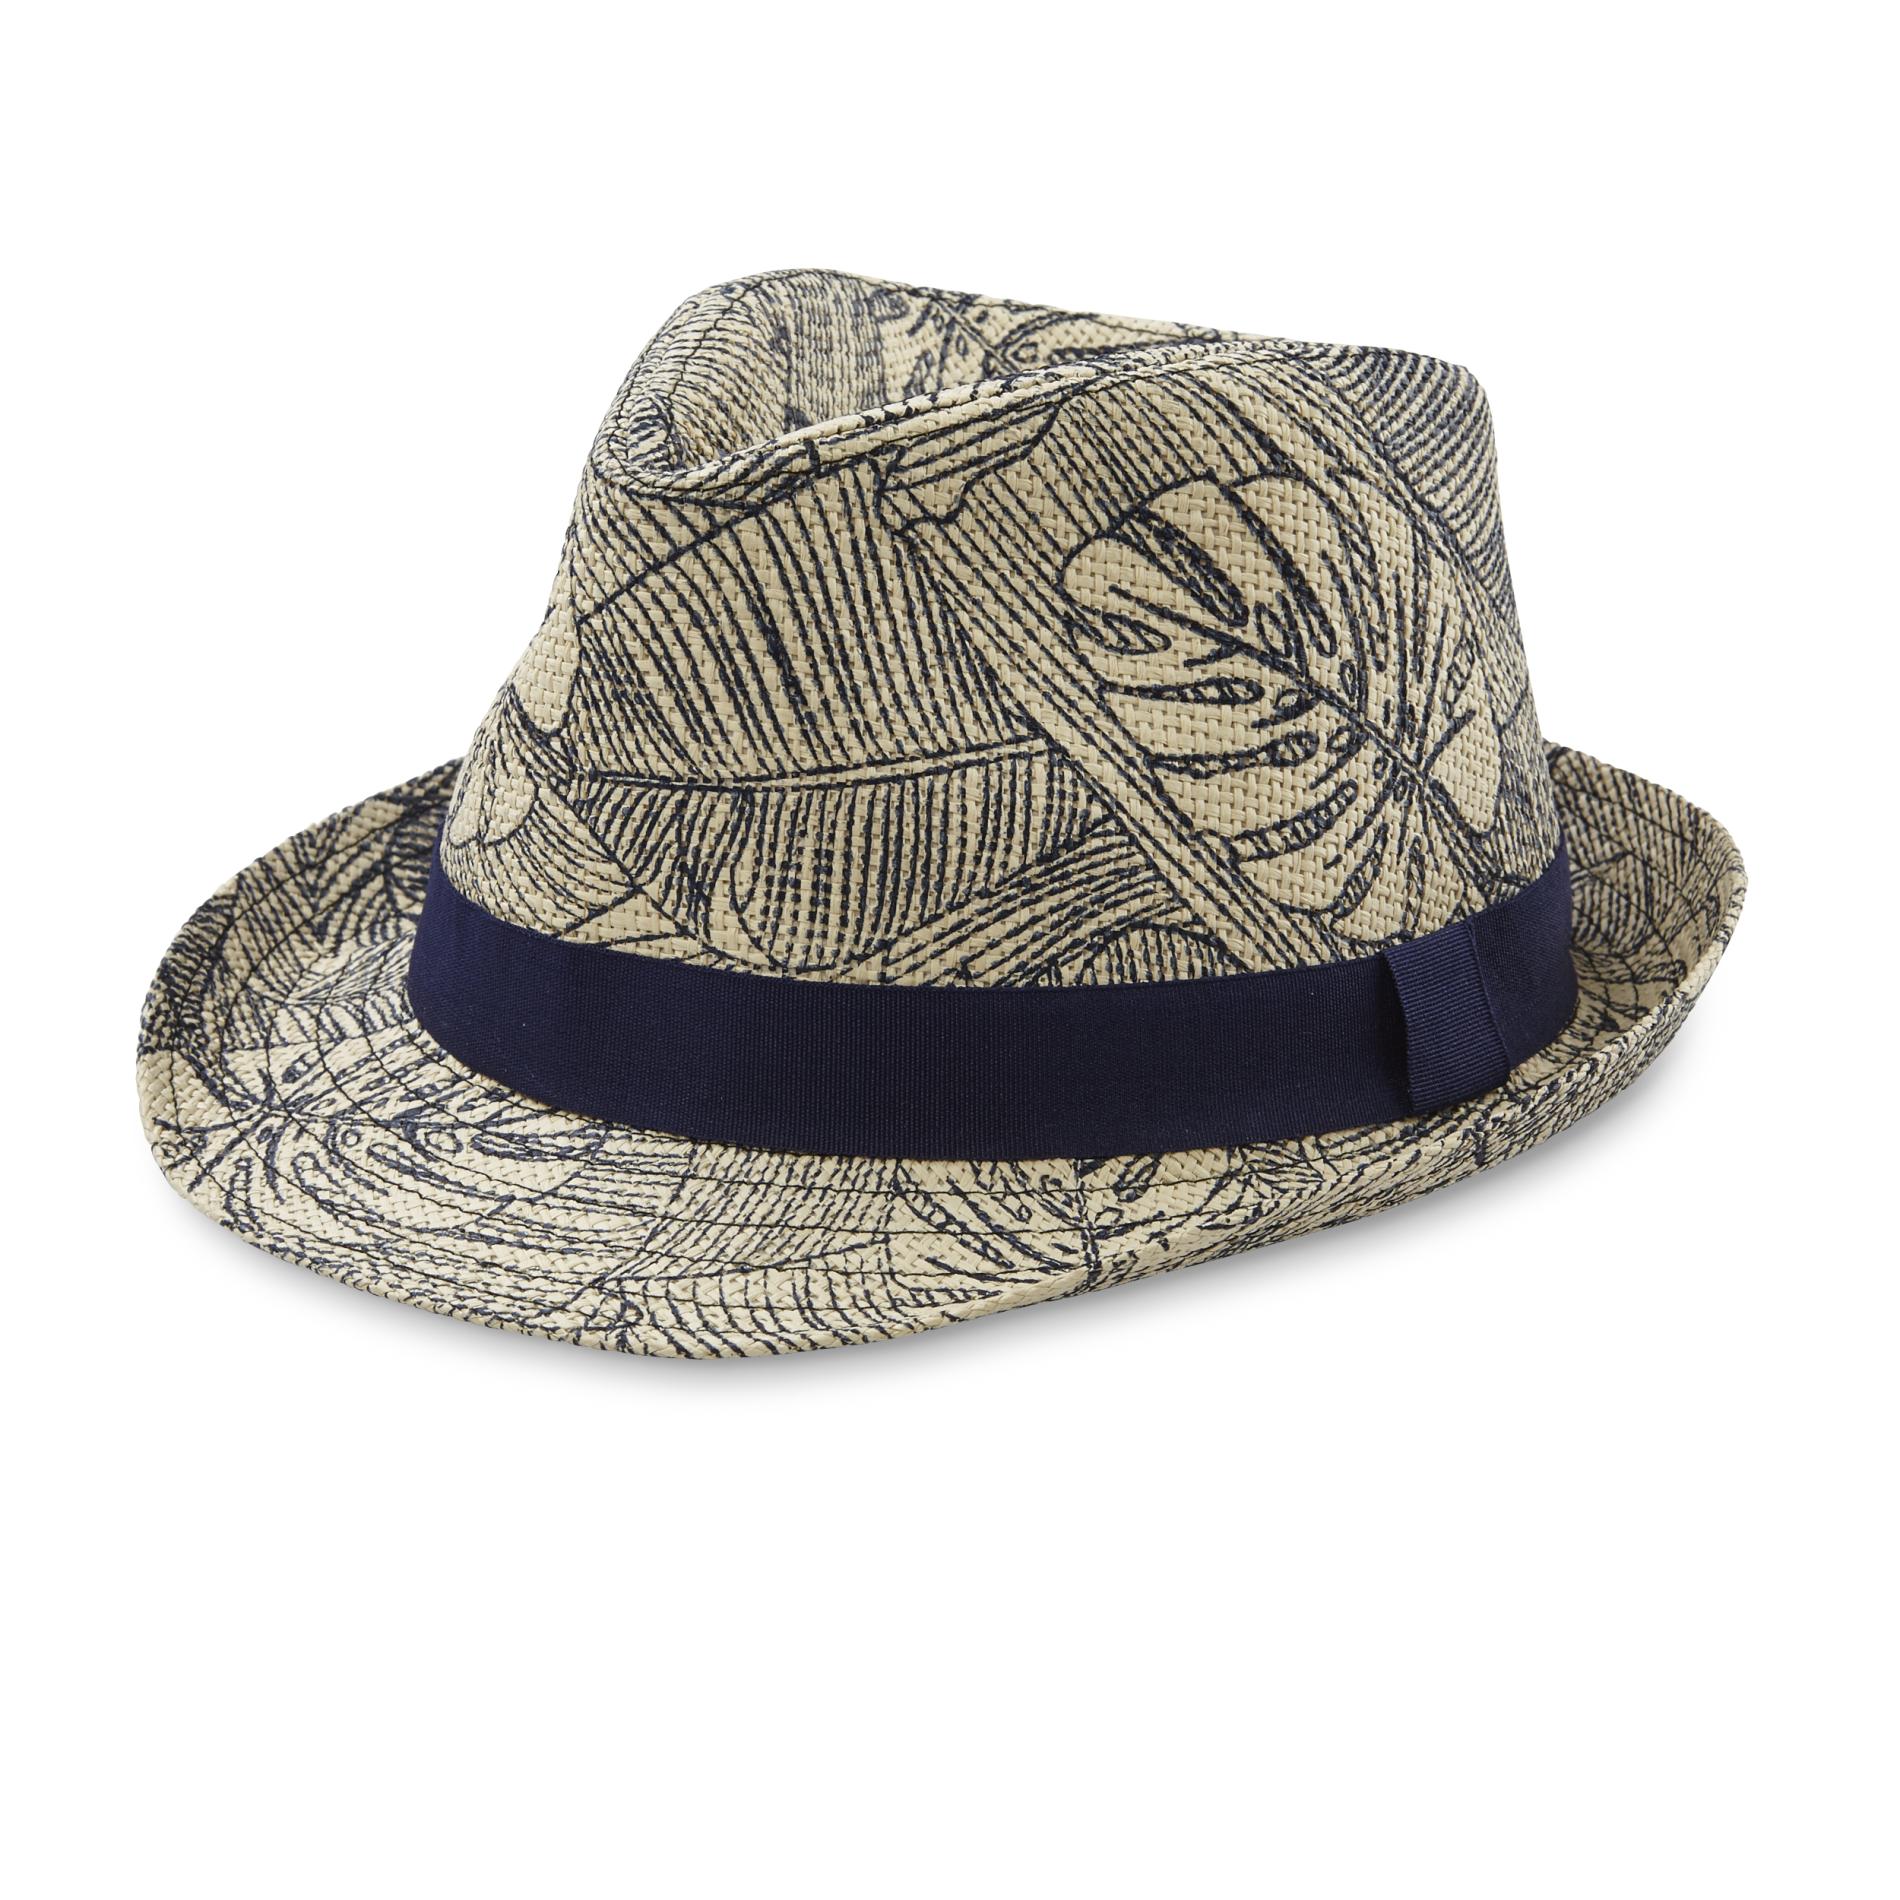 Men's Leaf Print Straw Fedora Hat